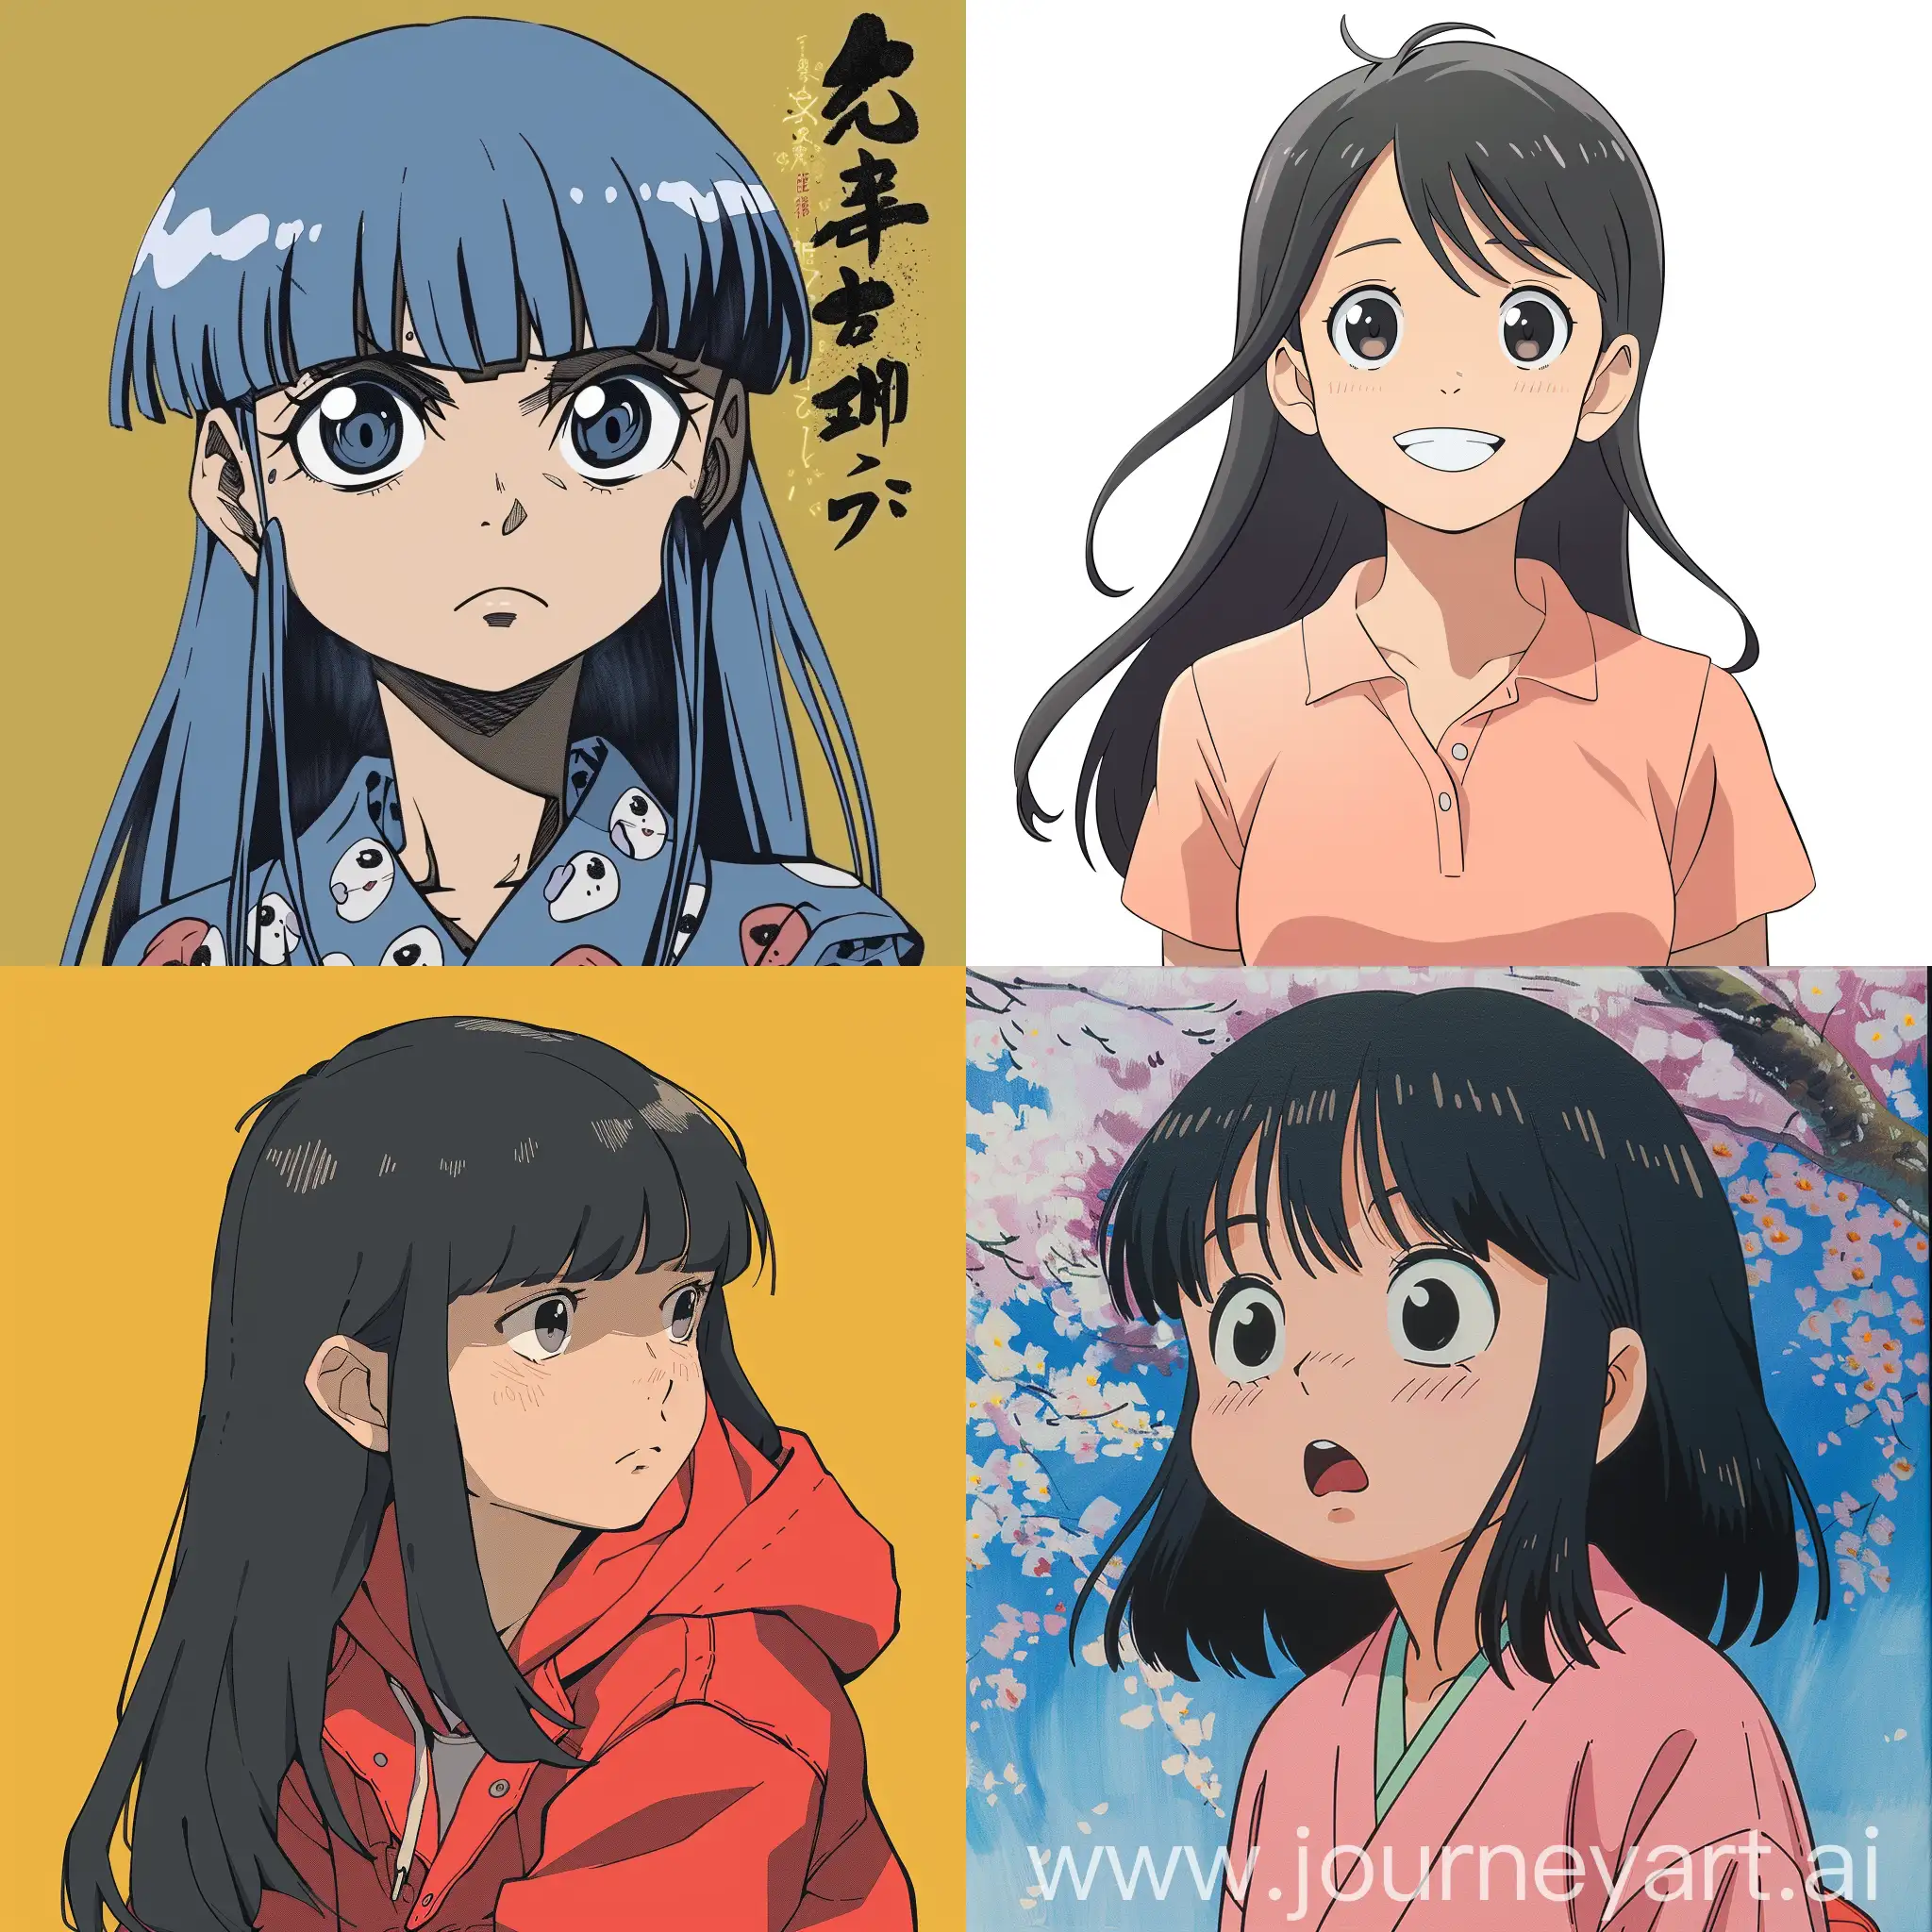 Komisan-Manga-Character-in-Vibrant-Digital-Art